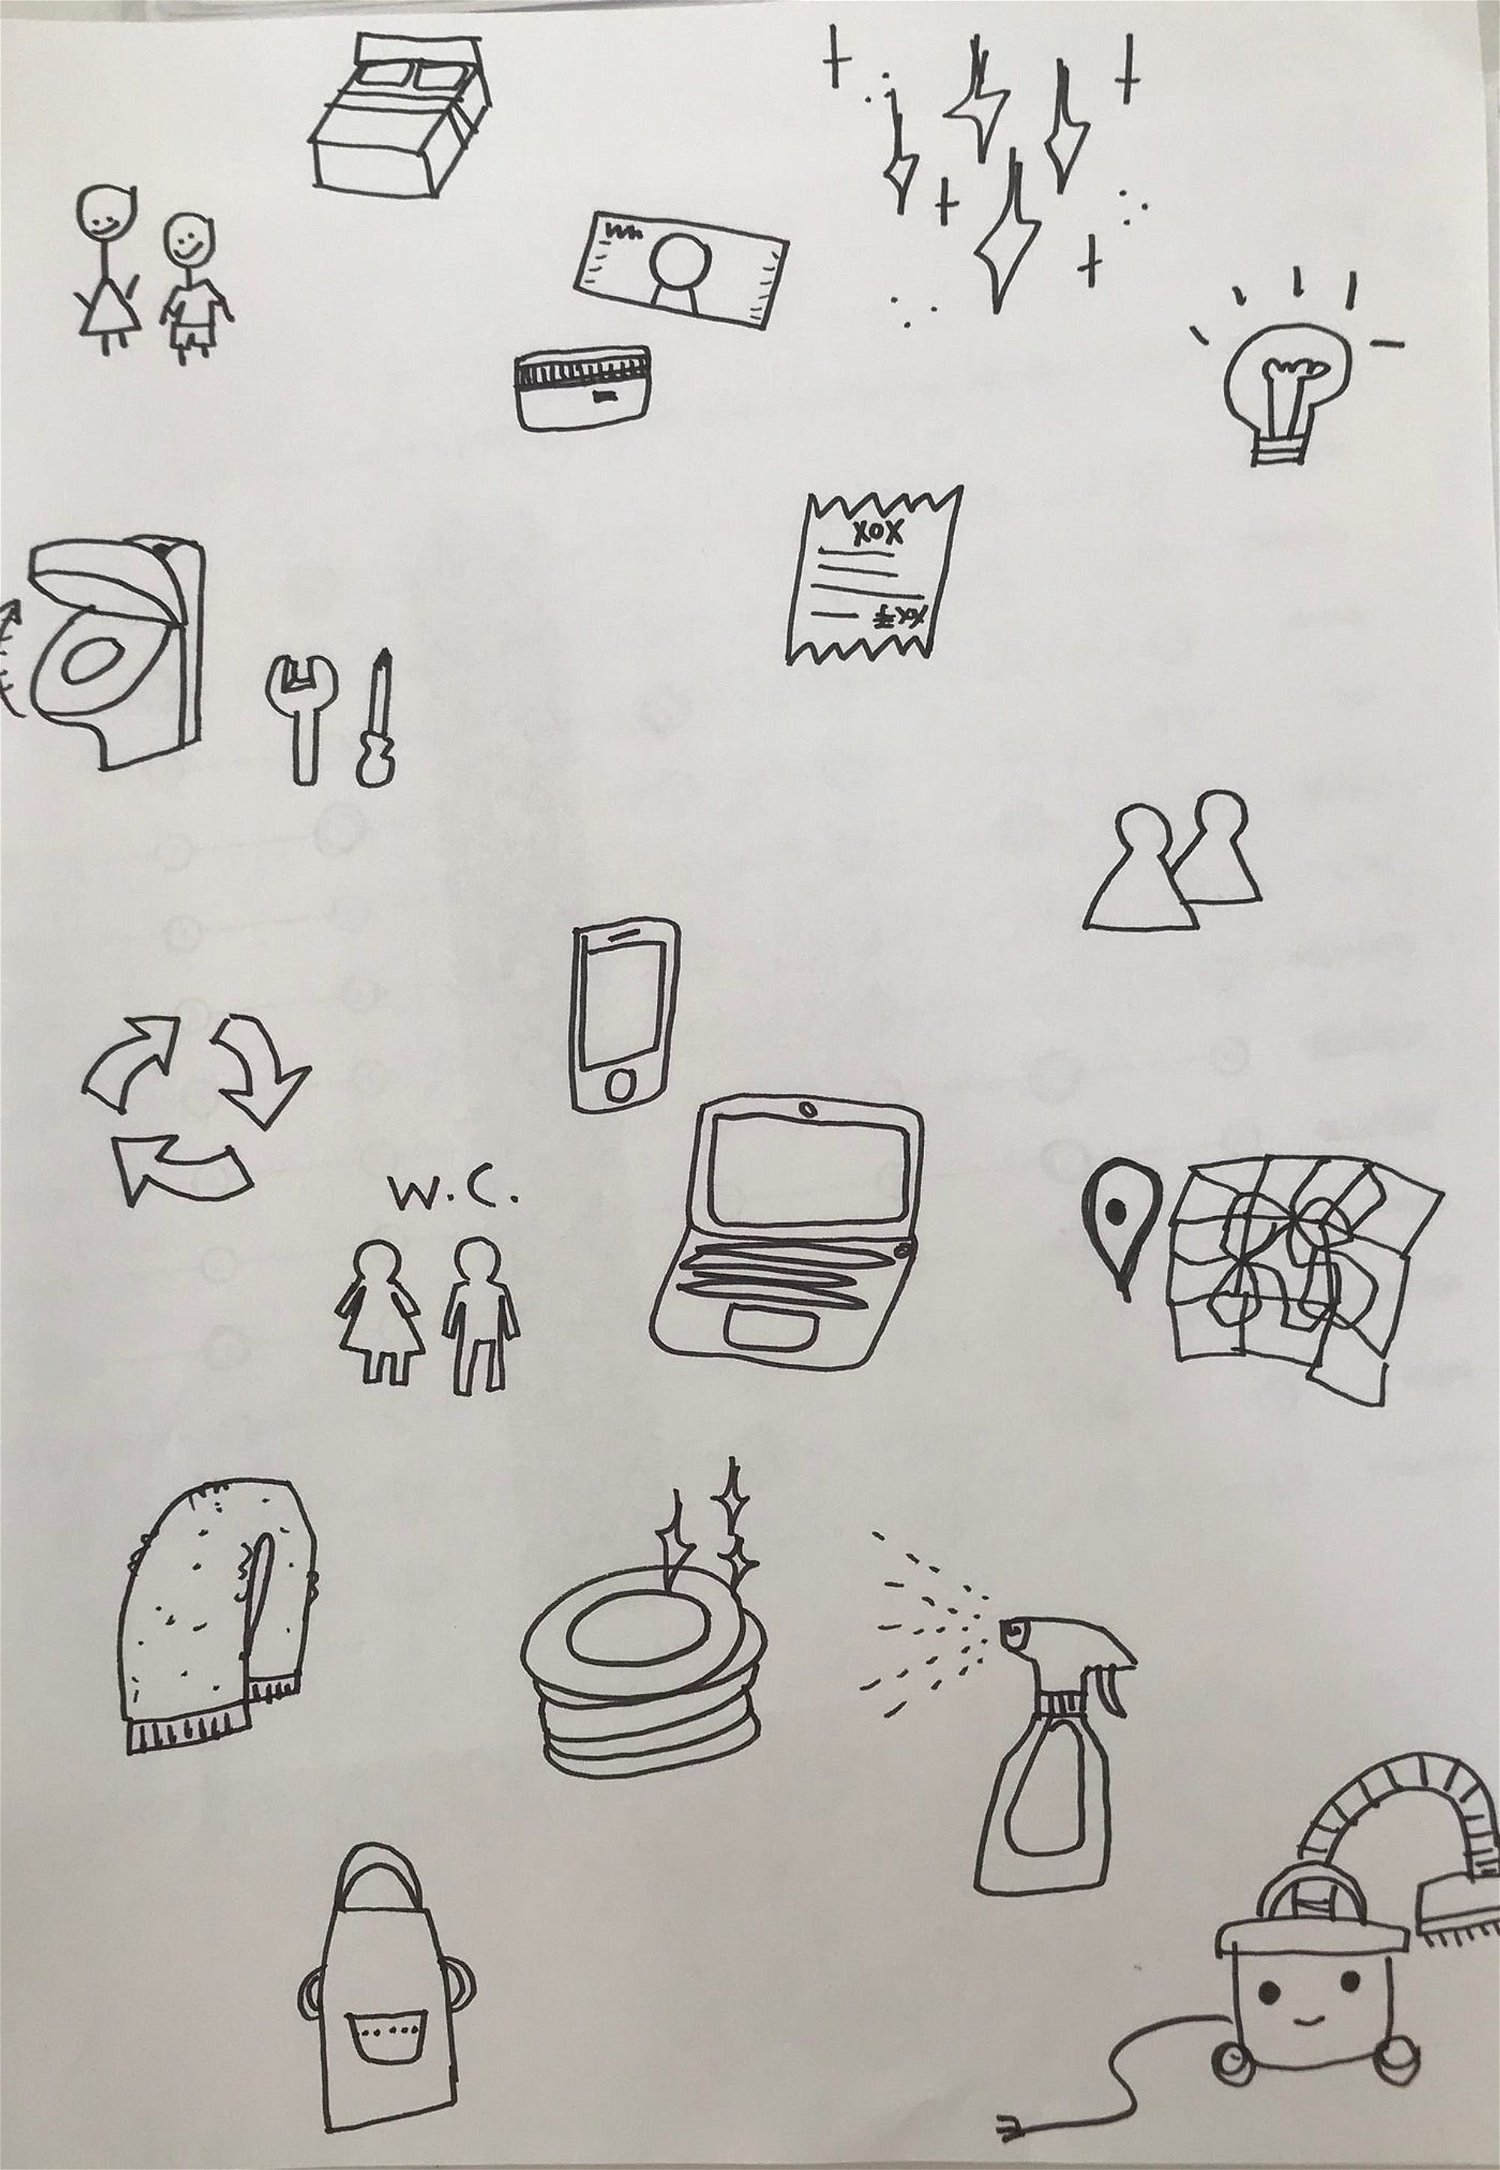 Tidy — Sketch of ideas